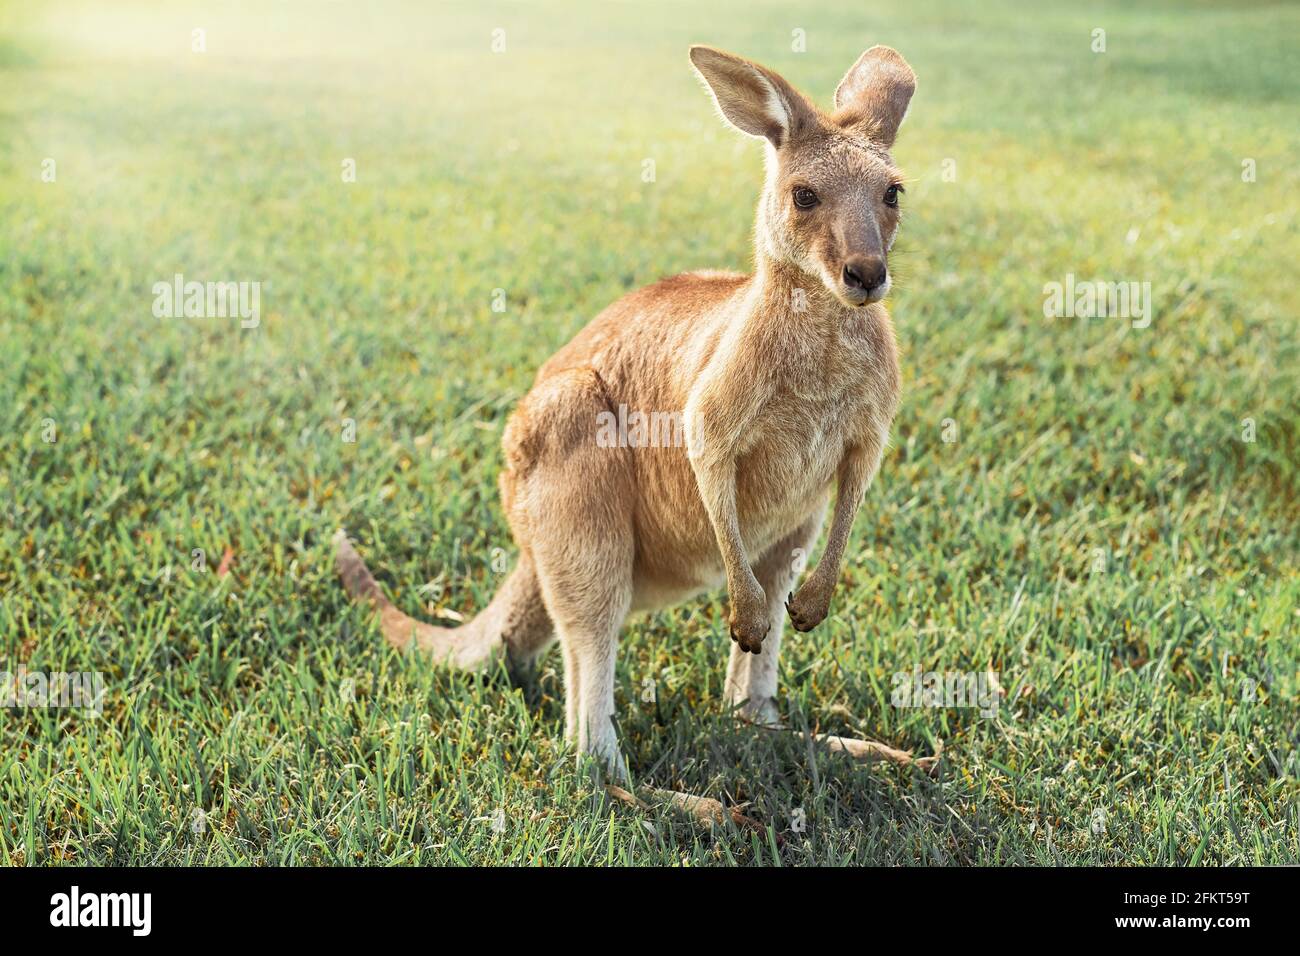 Australian kangaroo enjoying the afternoon sun in a park Stock Photo